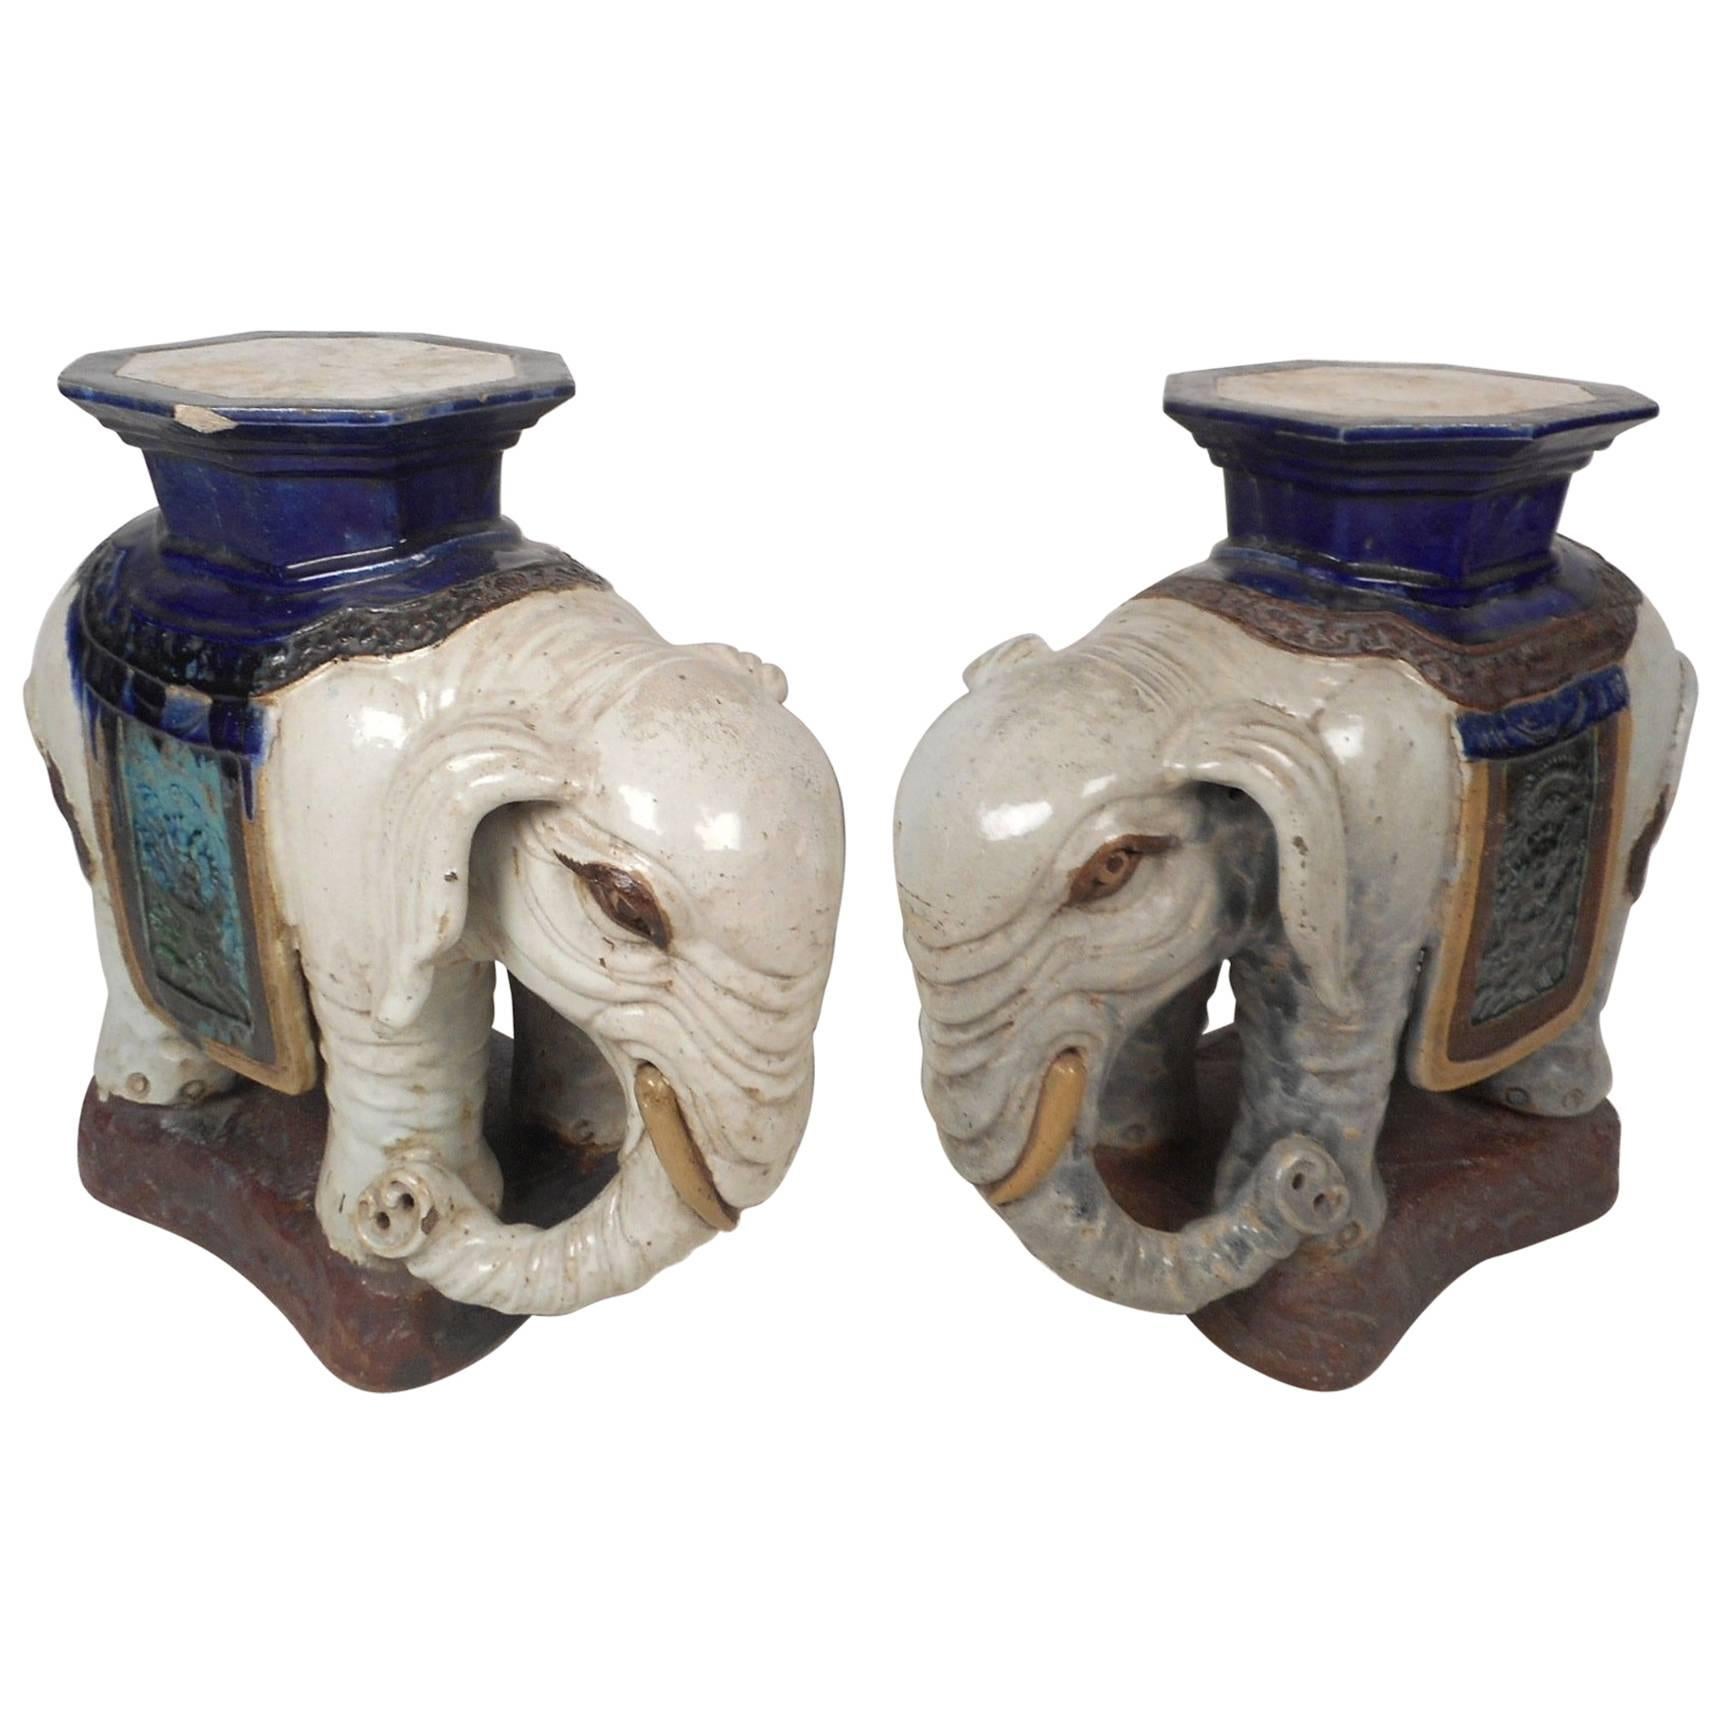 Amazing Vintage Ceramic Elephant End Tables or Pedestals